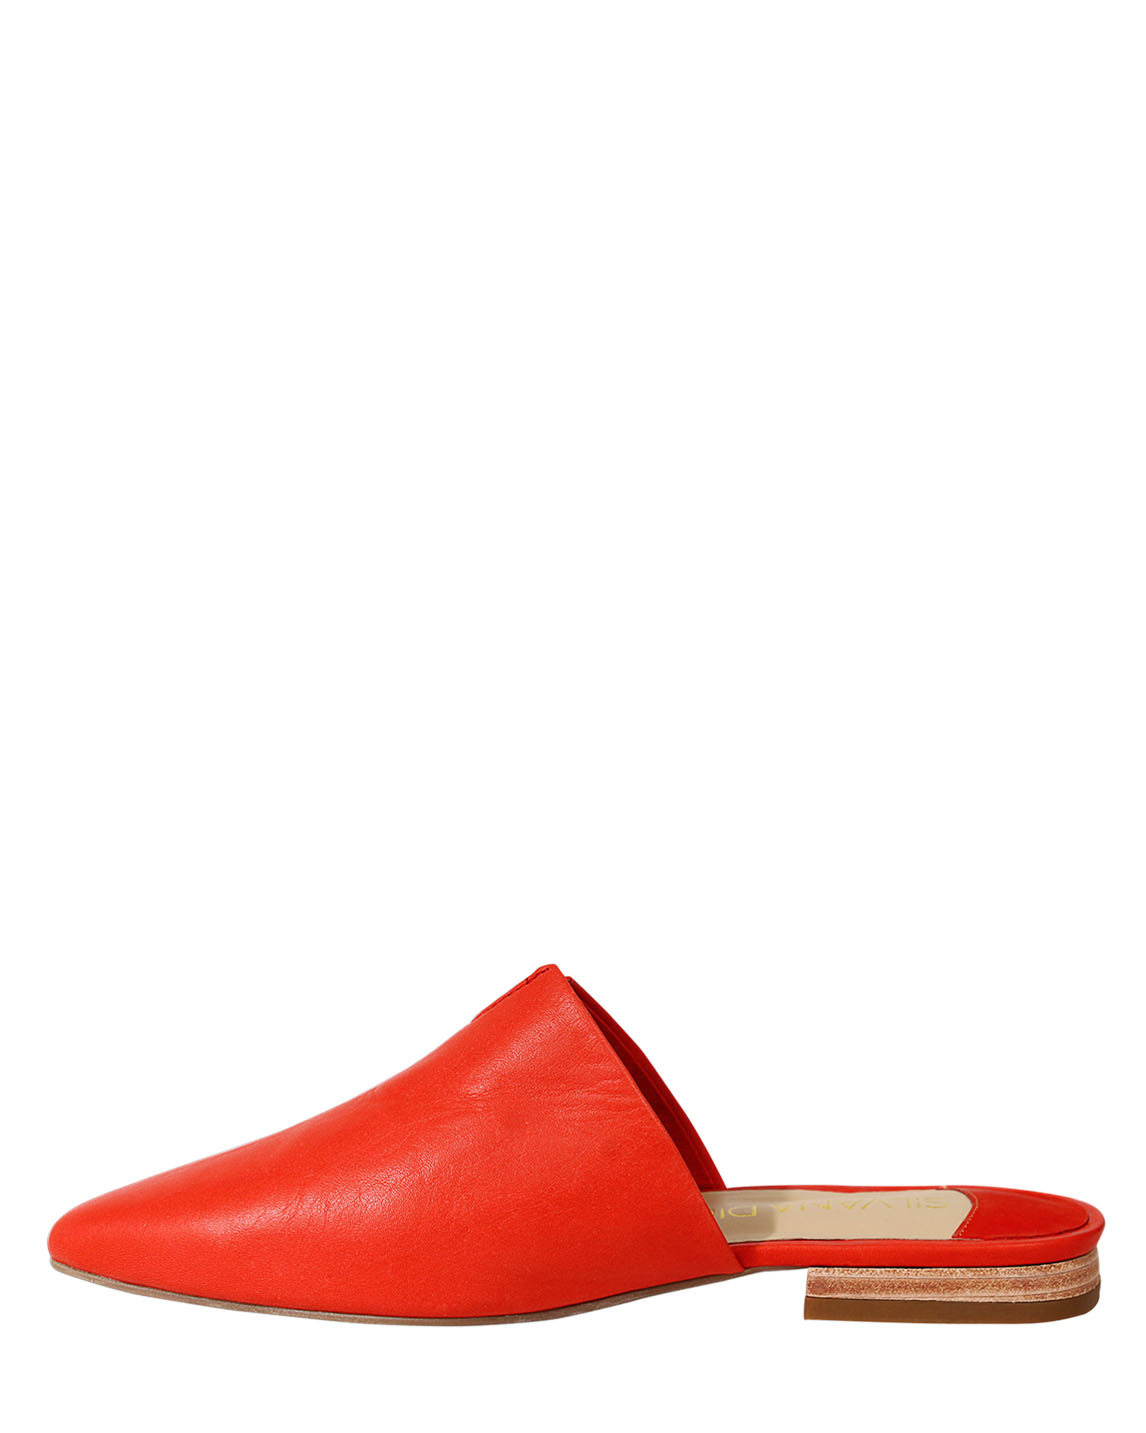 Zapato Zueco FZ-9500 Color Rojo